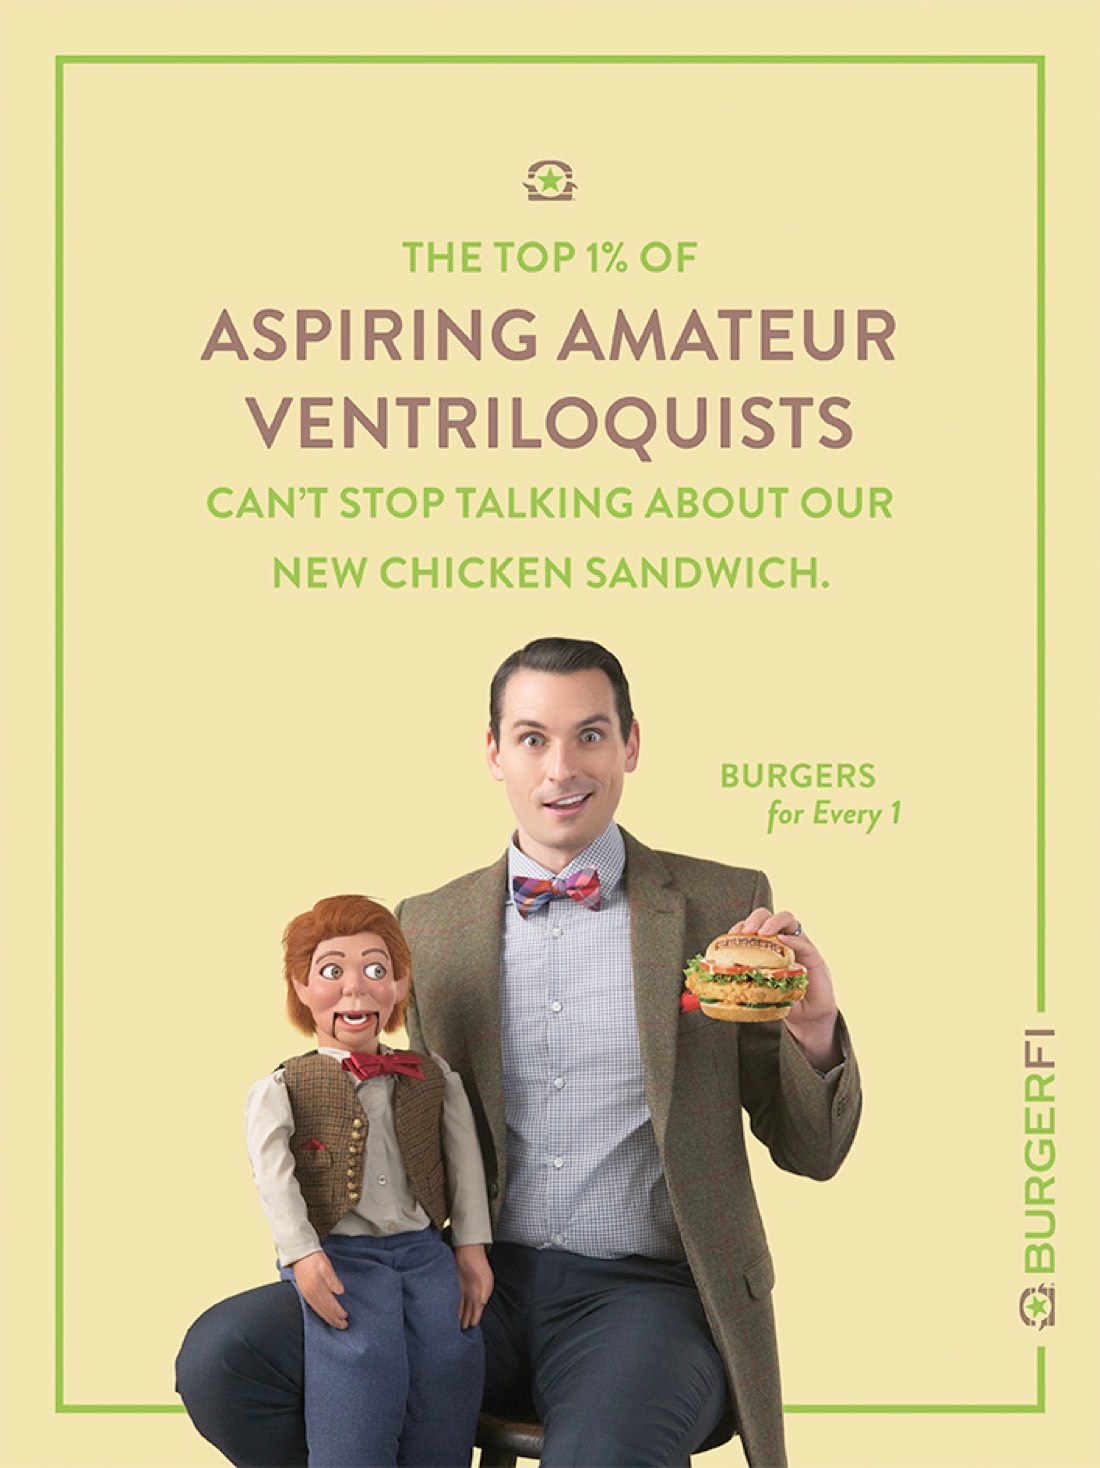 Print advertisement featuring a ventroliquist.